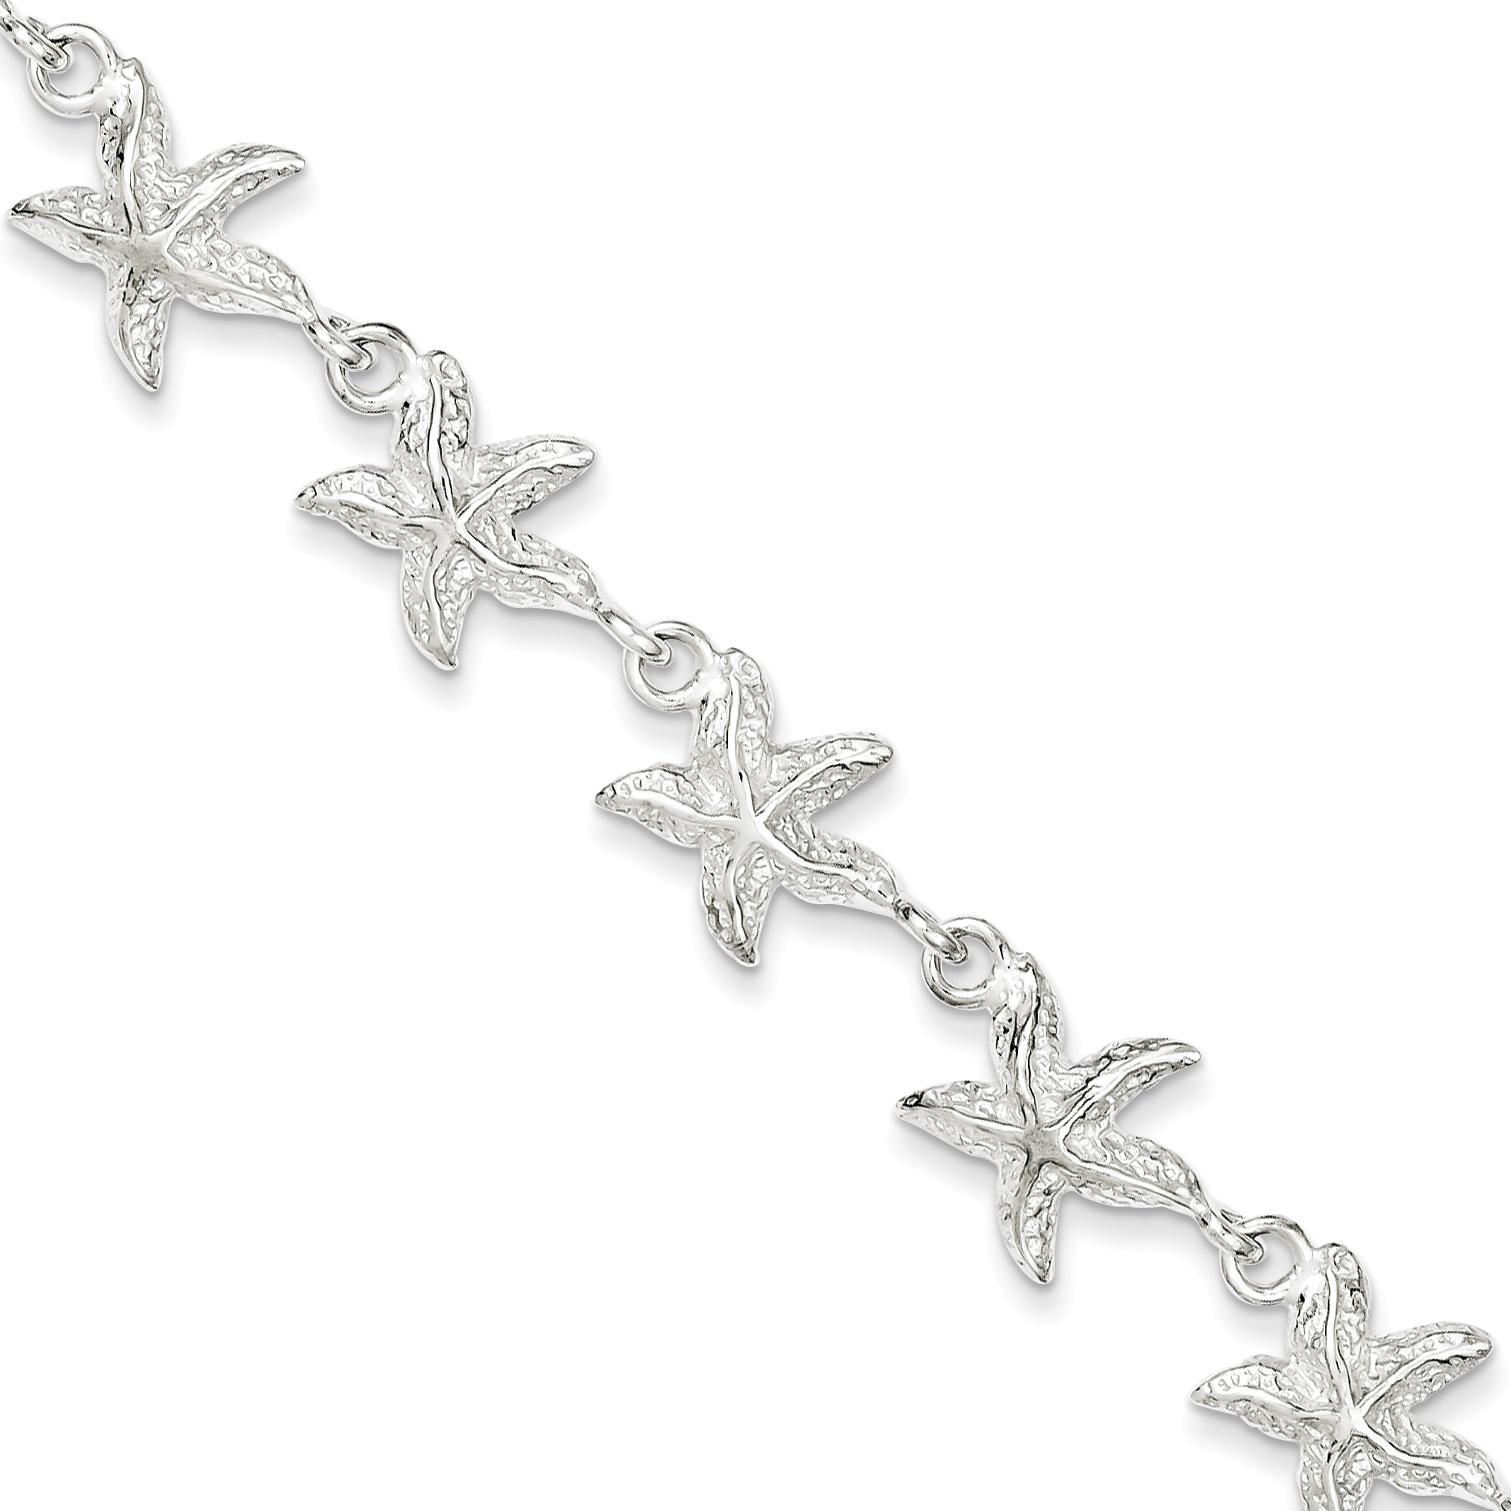 Findingking Sterling Silver Starfish Fancy Link Bracelet 7"